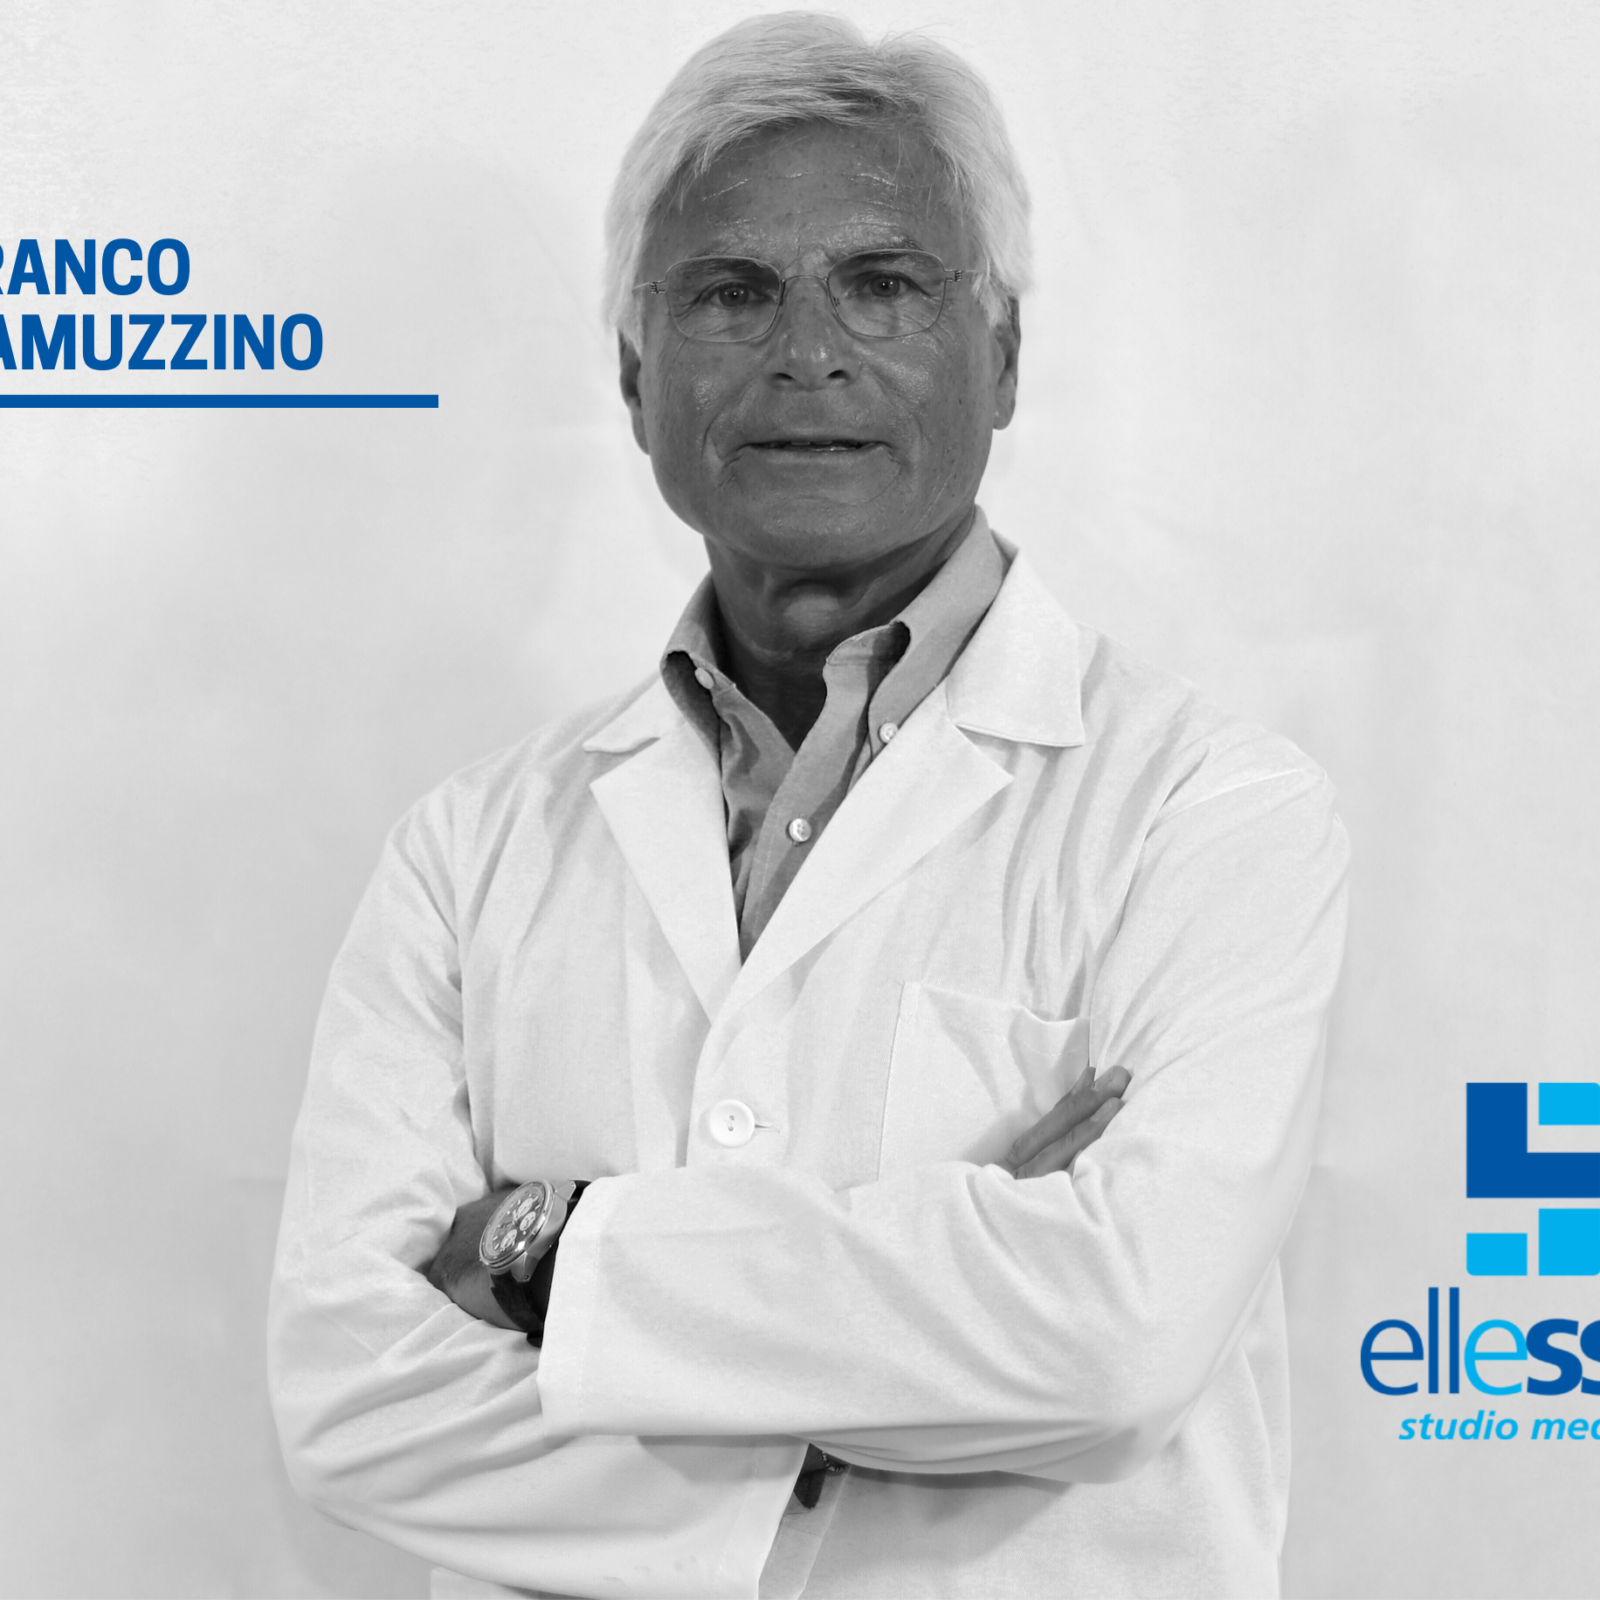 Prof. Lanfranco Scaramuzzino Ellesse Studio Medico Napoli